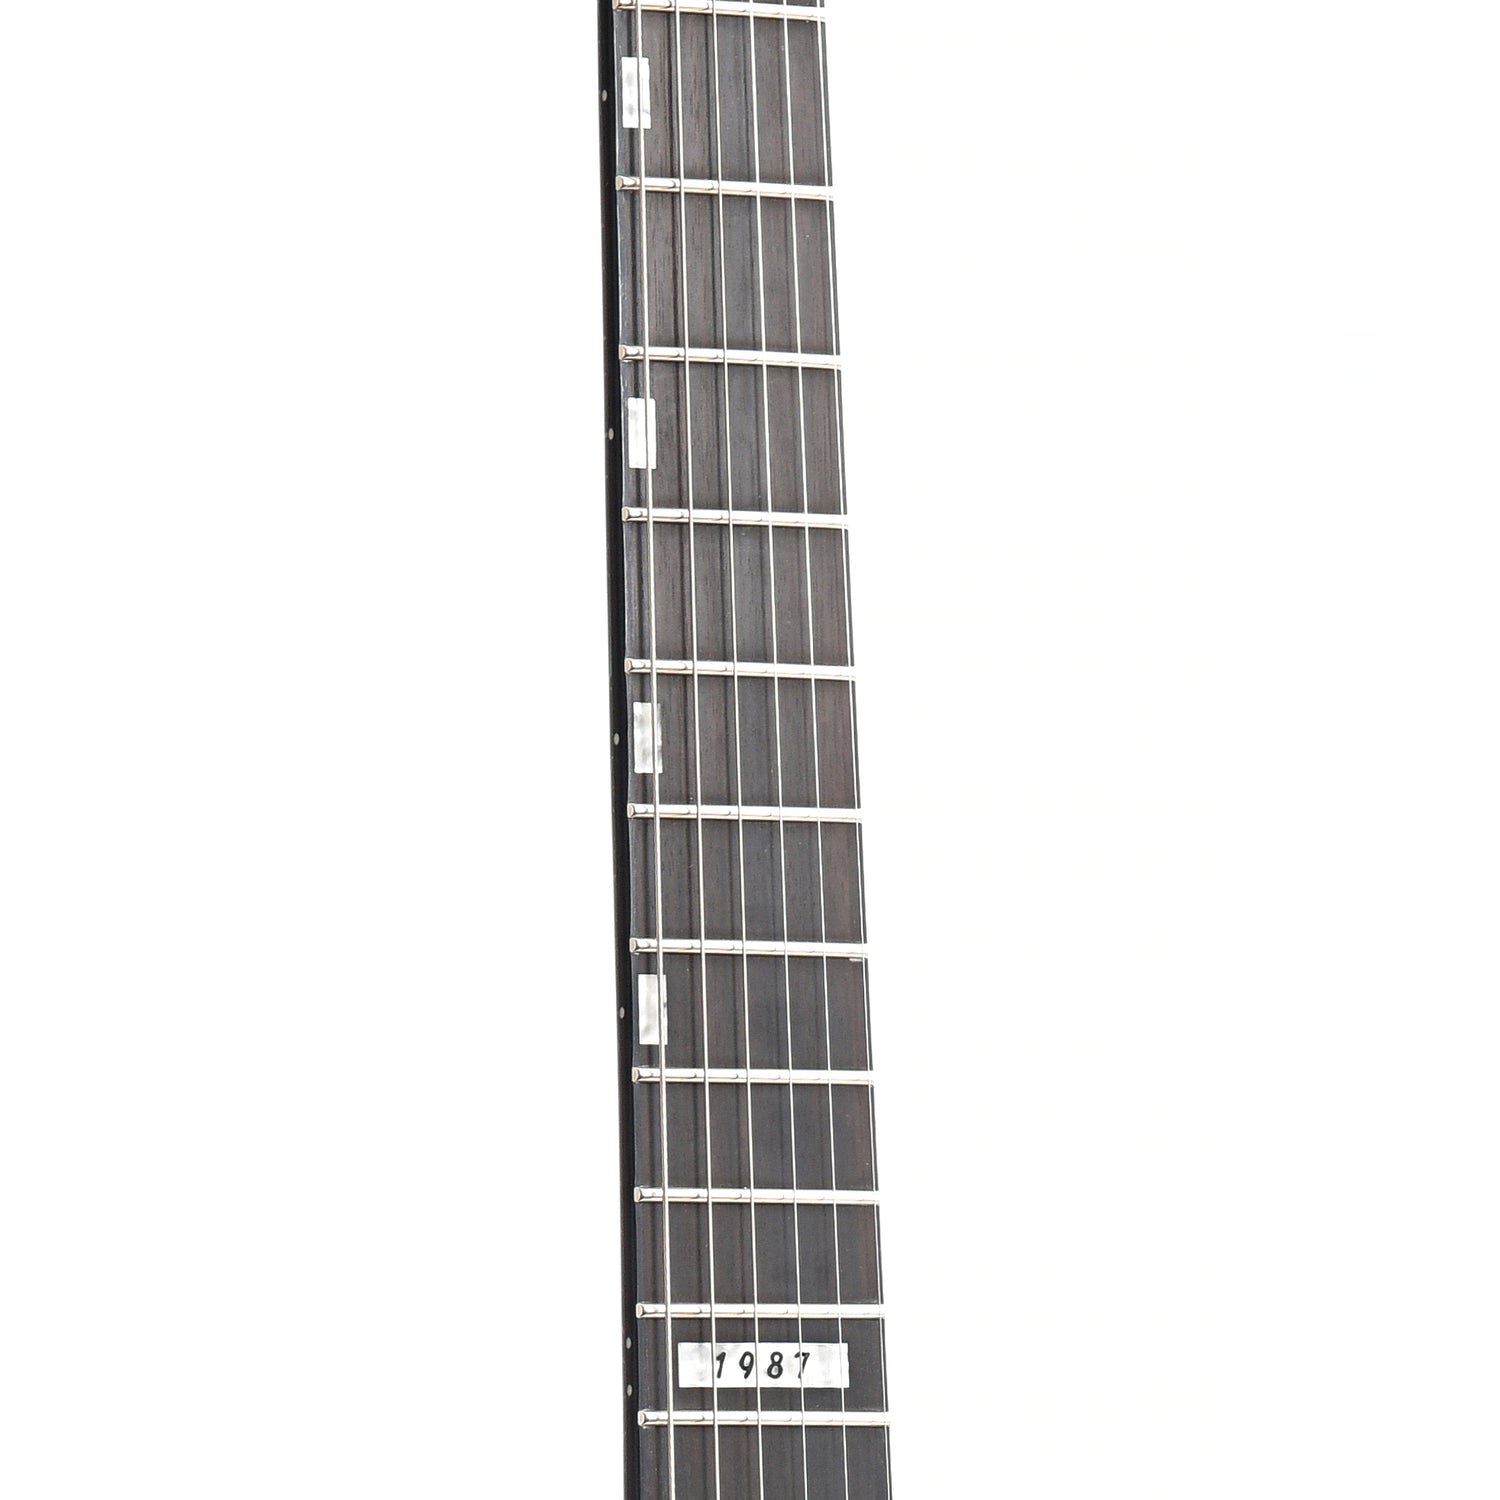 Fretboard of ESP LTD M-1 Custom '87 Rainbow Crackle Electric Guitar